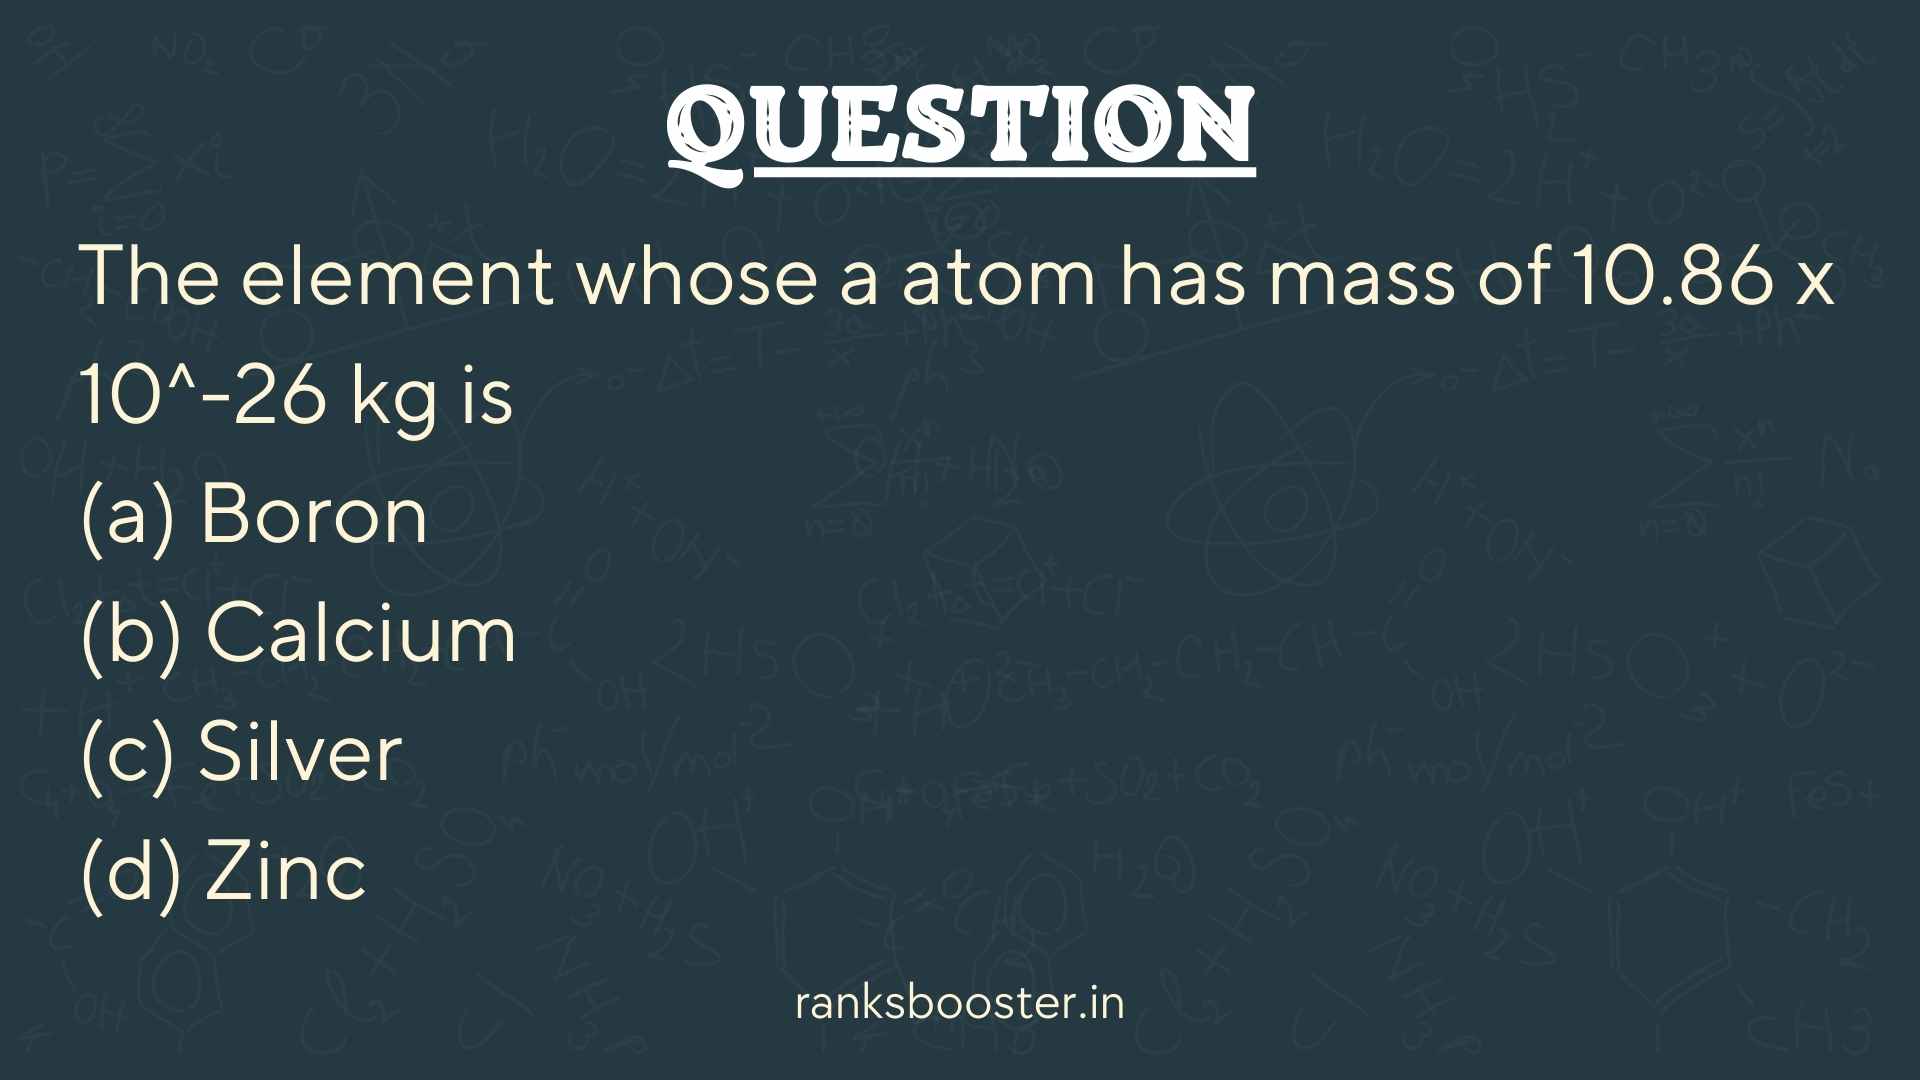 Question: The element whose a atom has mass of 10.86 x 10^-26 kg is (a) Boron (b) Calcium (c) Silver (d) Zinc